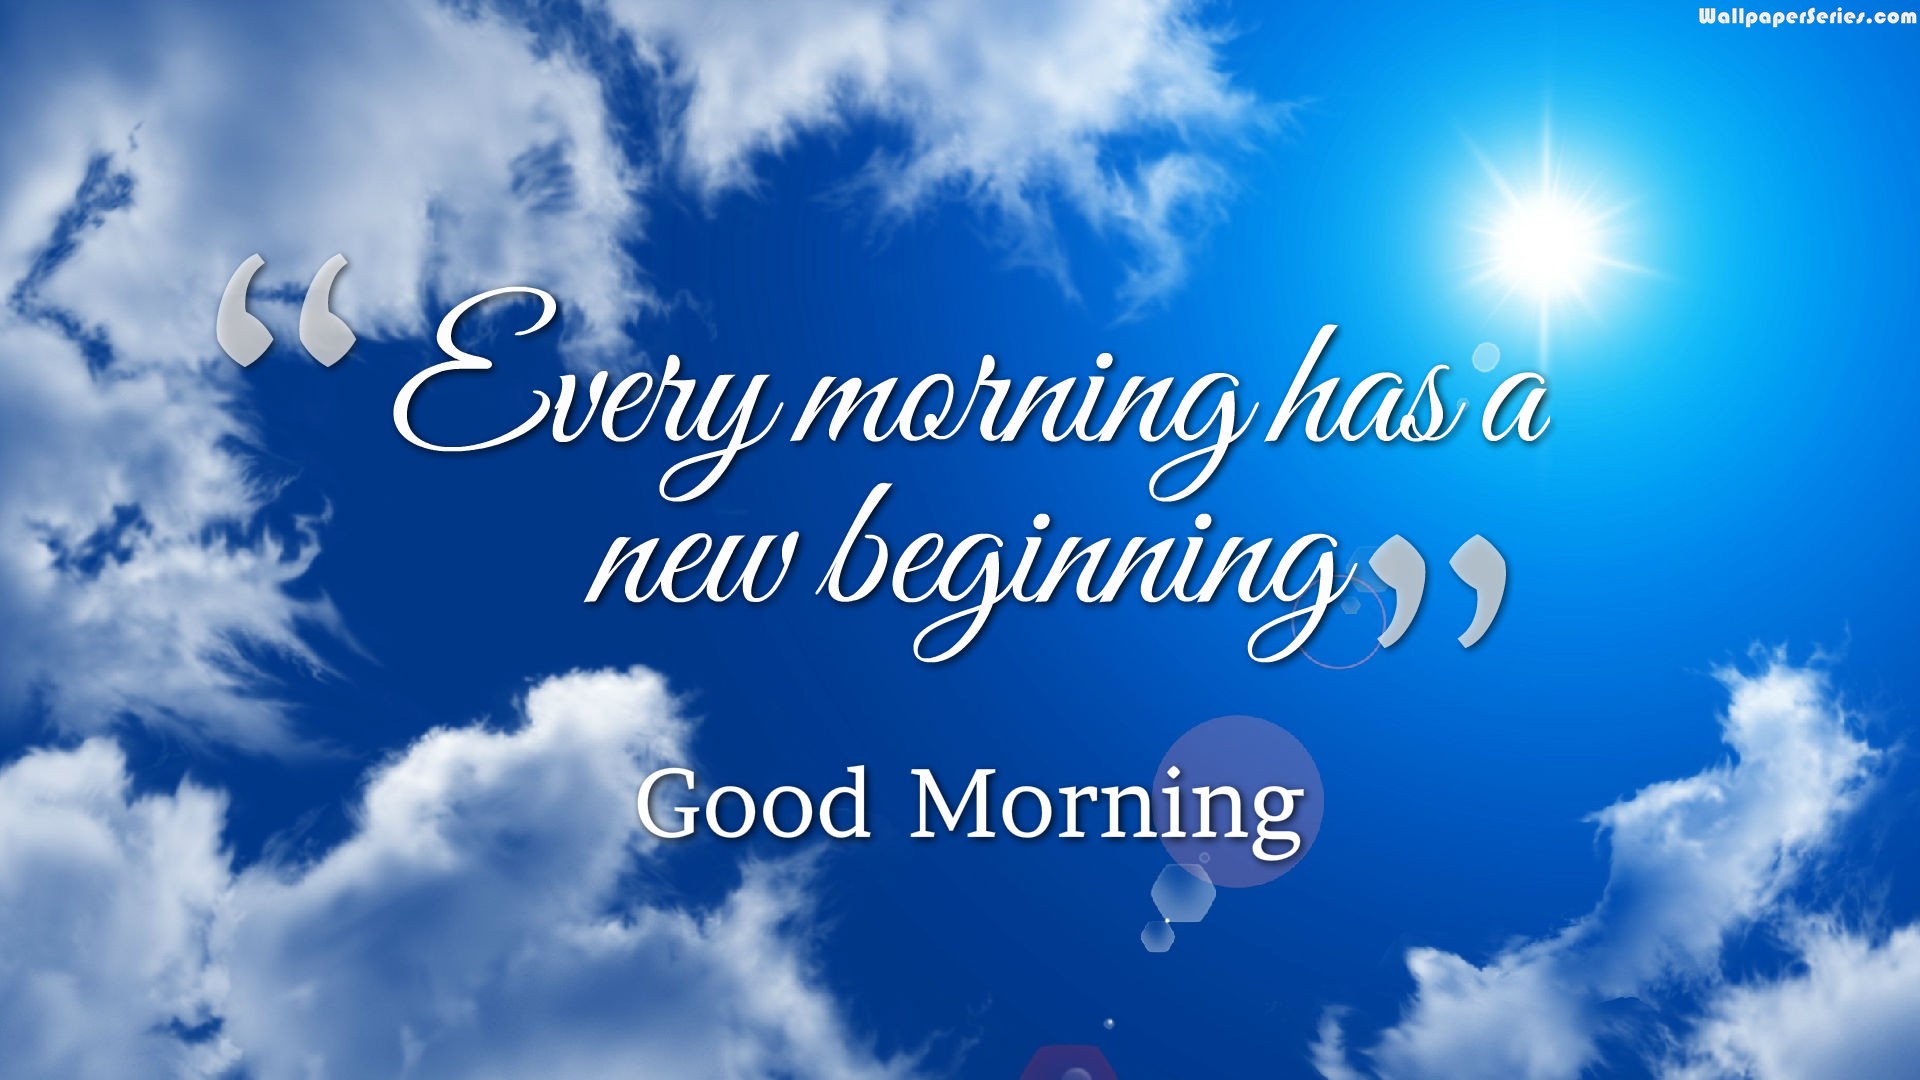 New Beginning Good Morning Quotes Wallpaper - Good Morning Quotes New Beginning - HD Wallpaper 